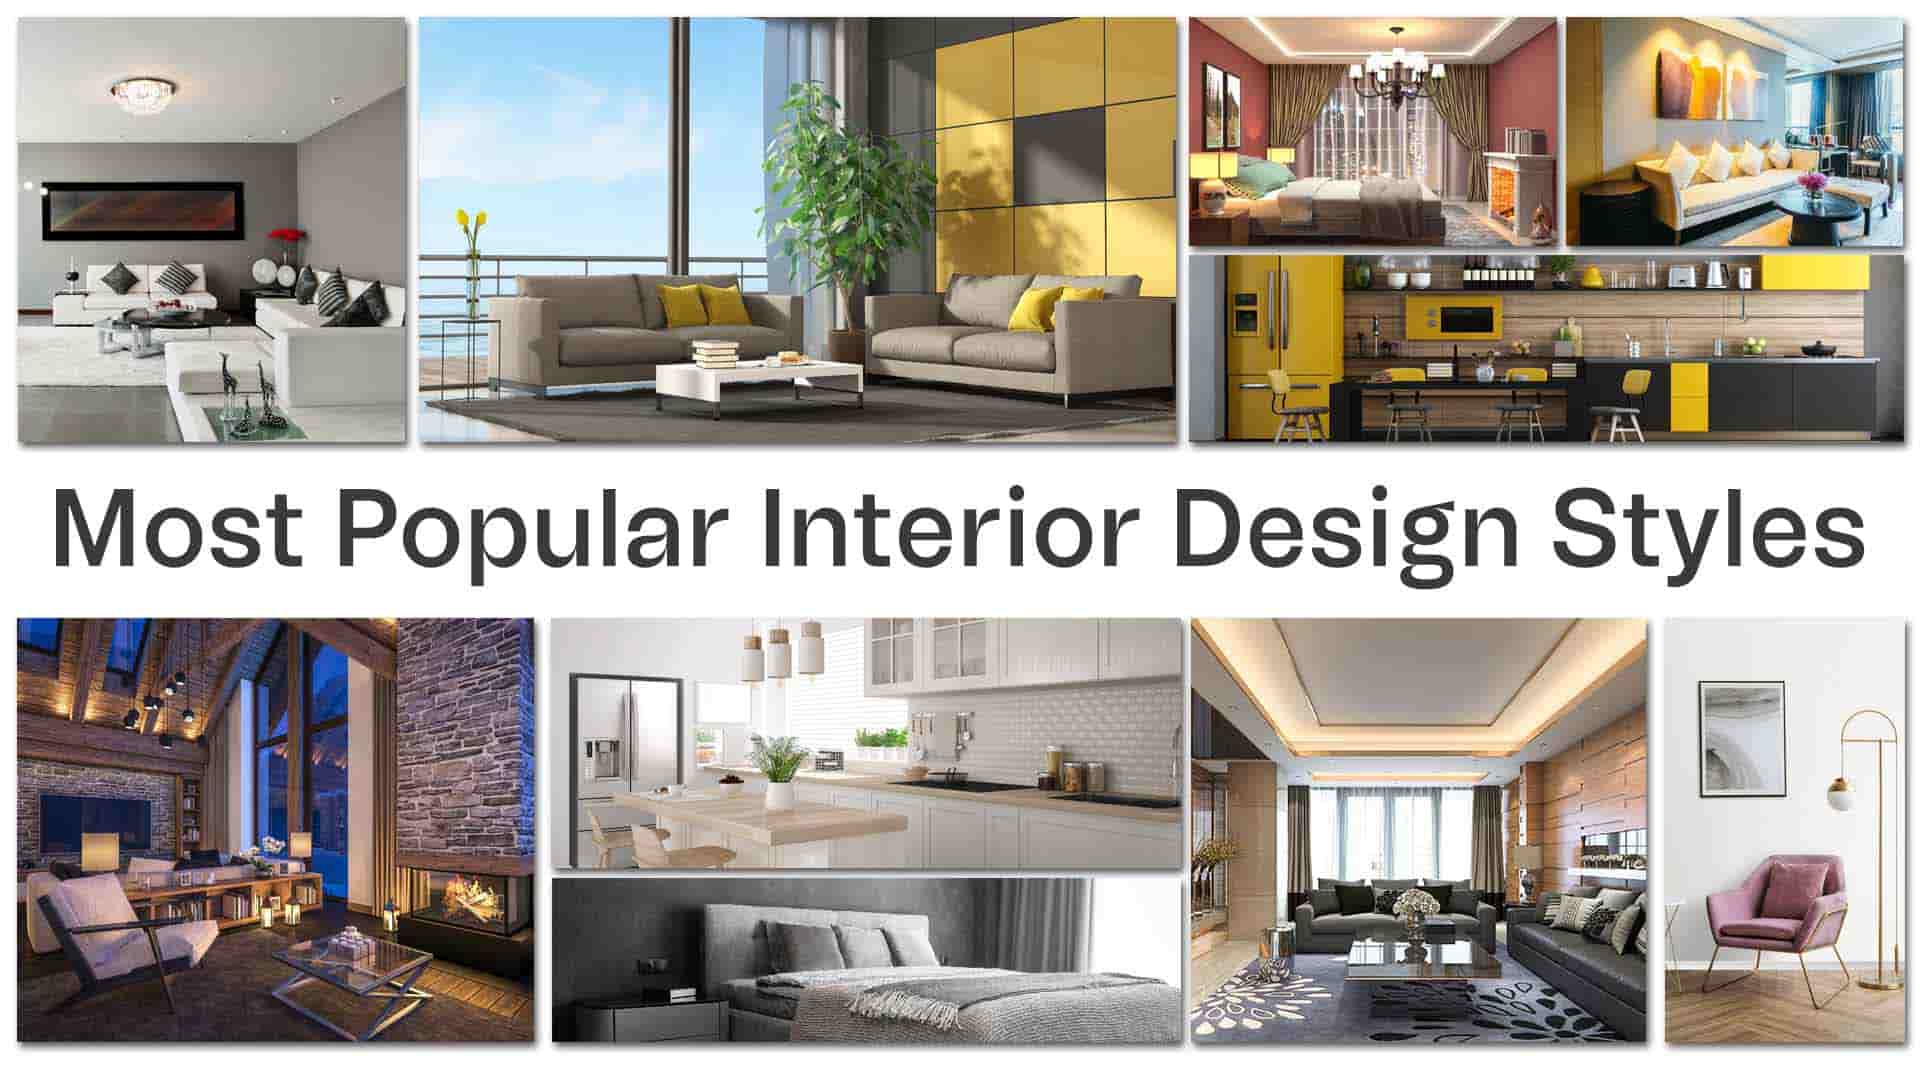 Most Popular Types of Interior Design StylesMost Popular Types of Interior Design Styles